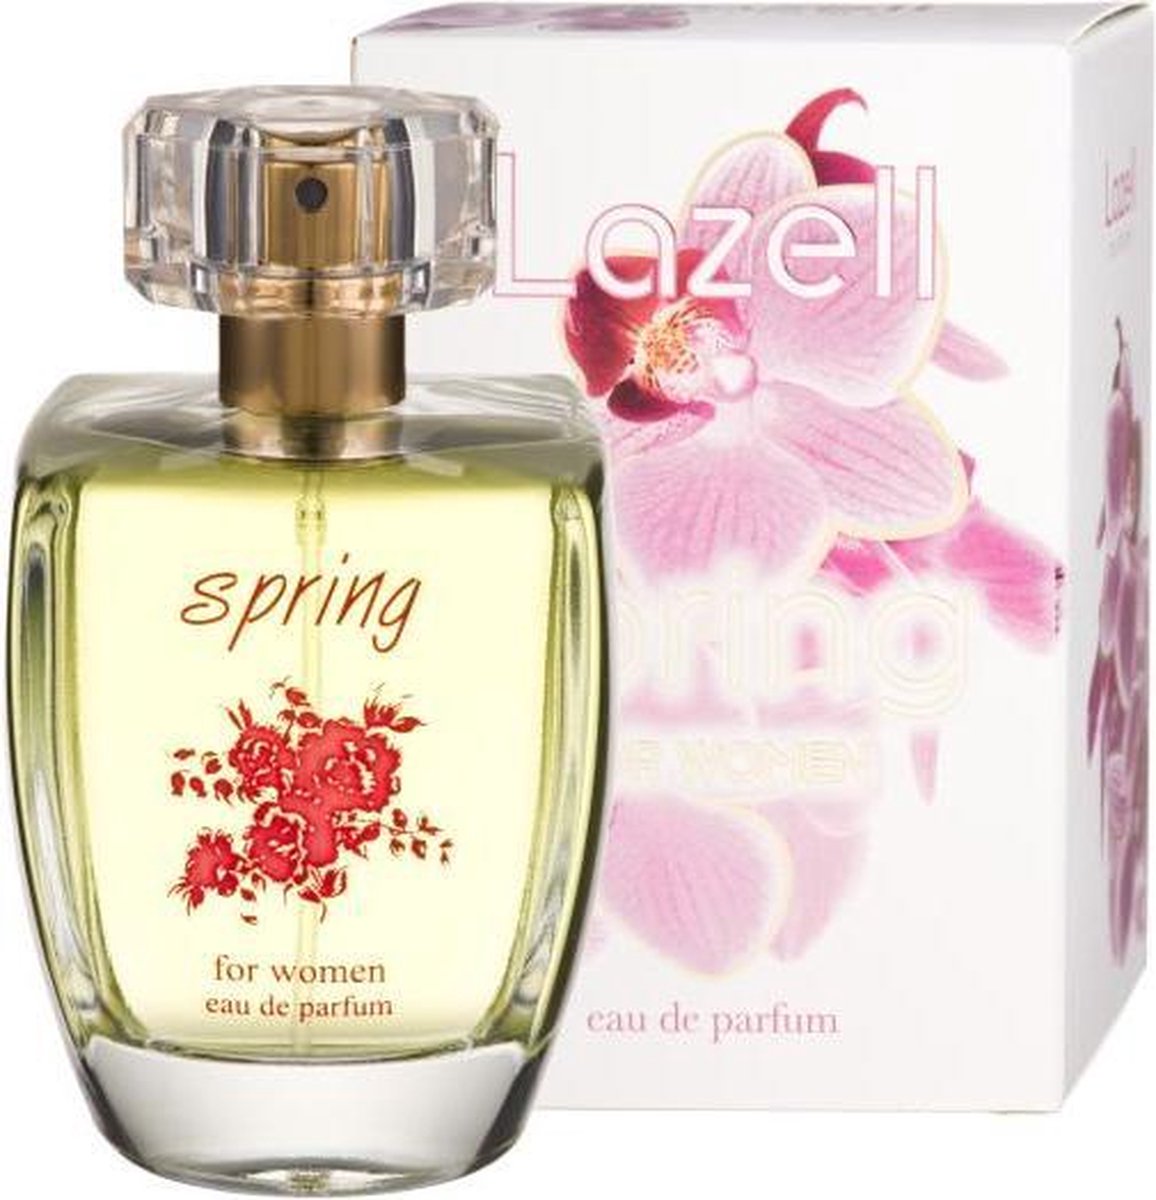 Lazell - Spring For Women - Eau De Parfum - 100ML